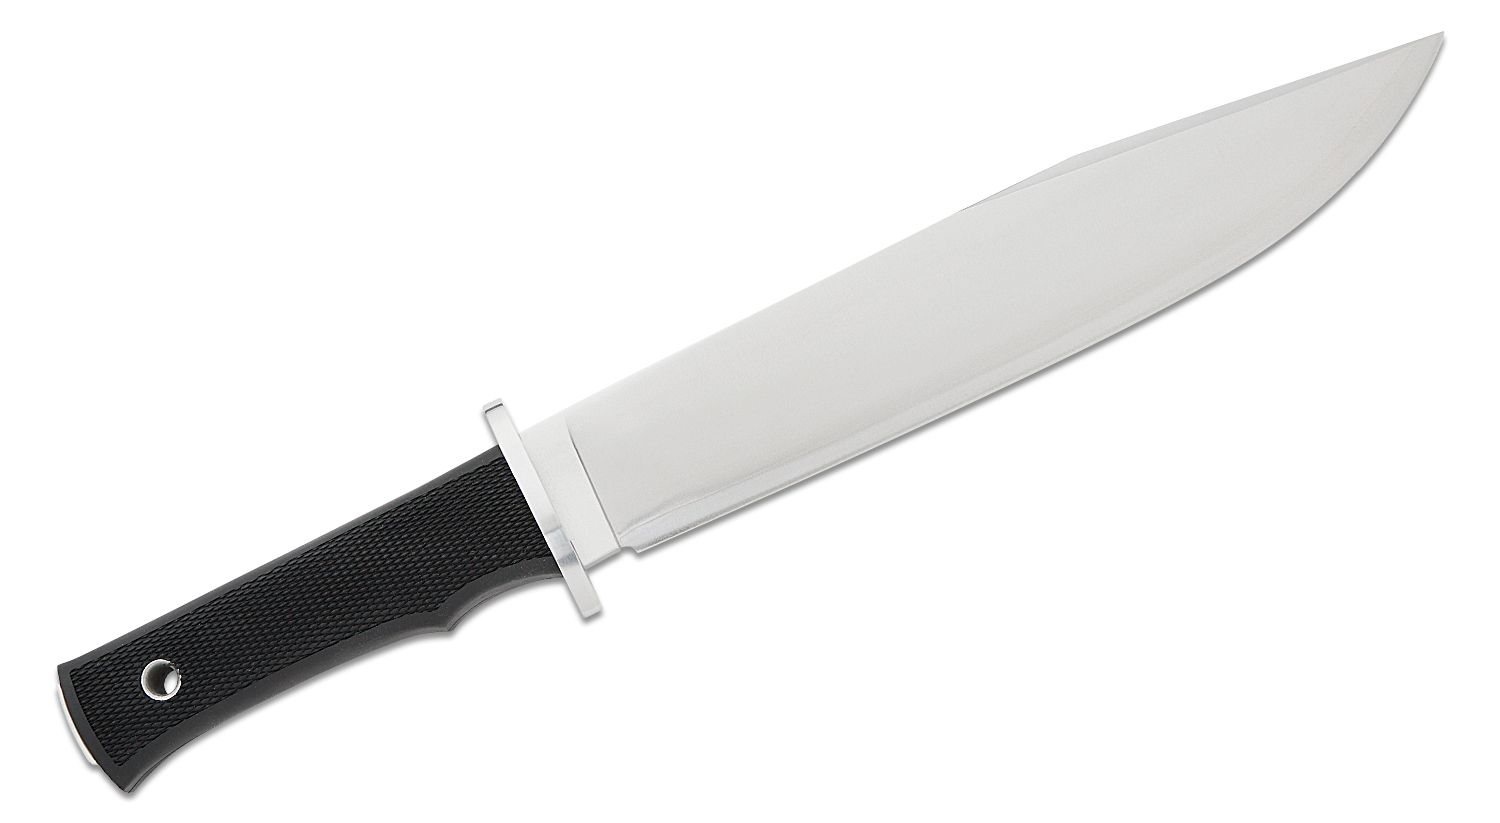 https://pics.knifecenter.com/knifecenter/fallkniven-knives/images/SWEDMB10n_2.jpg